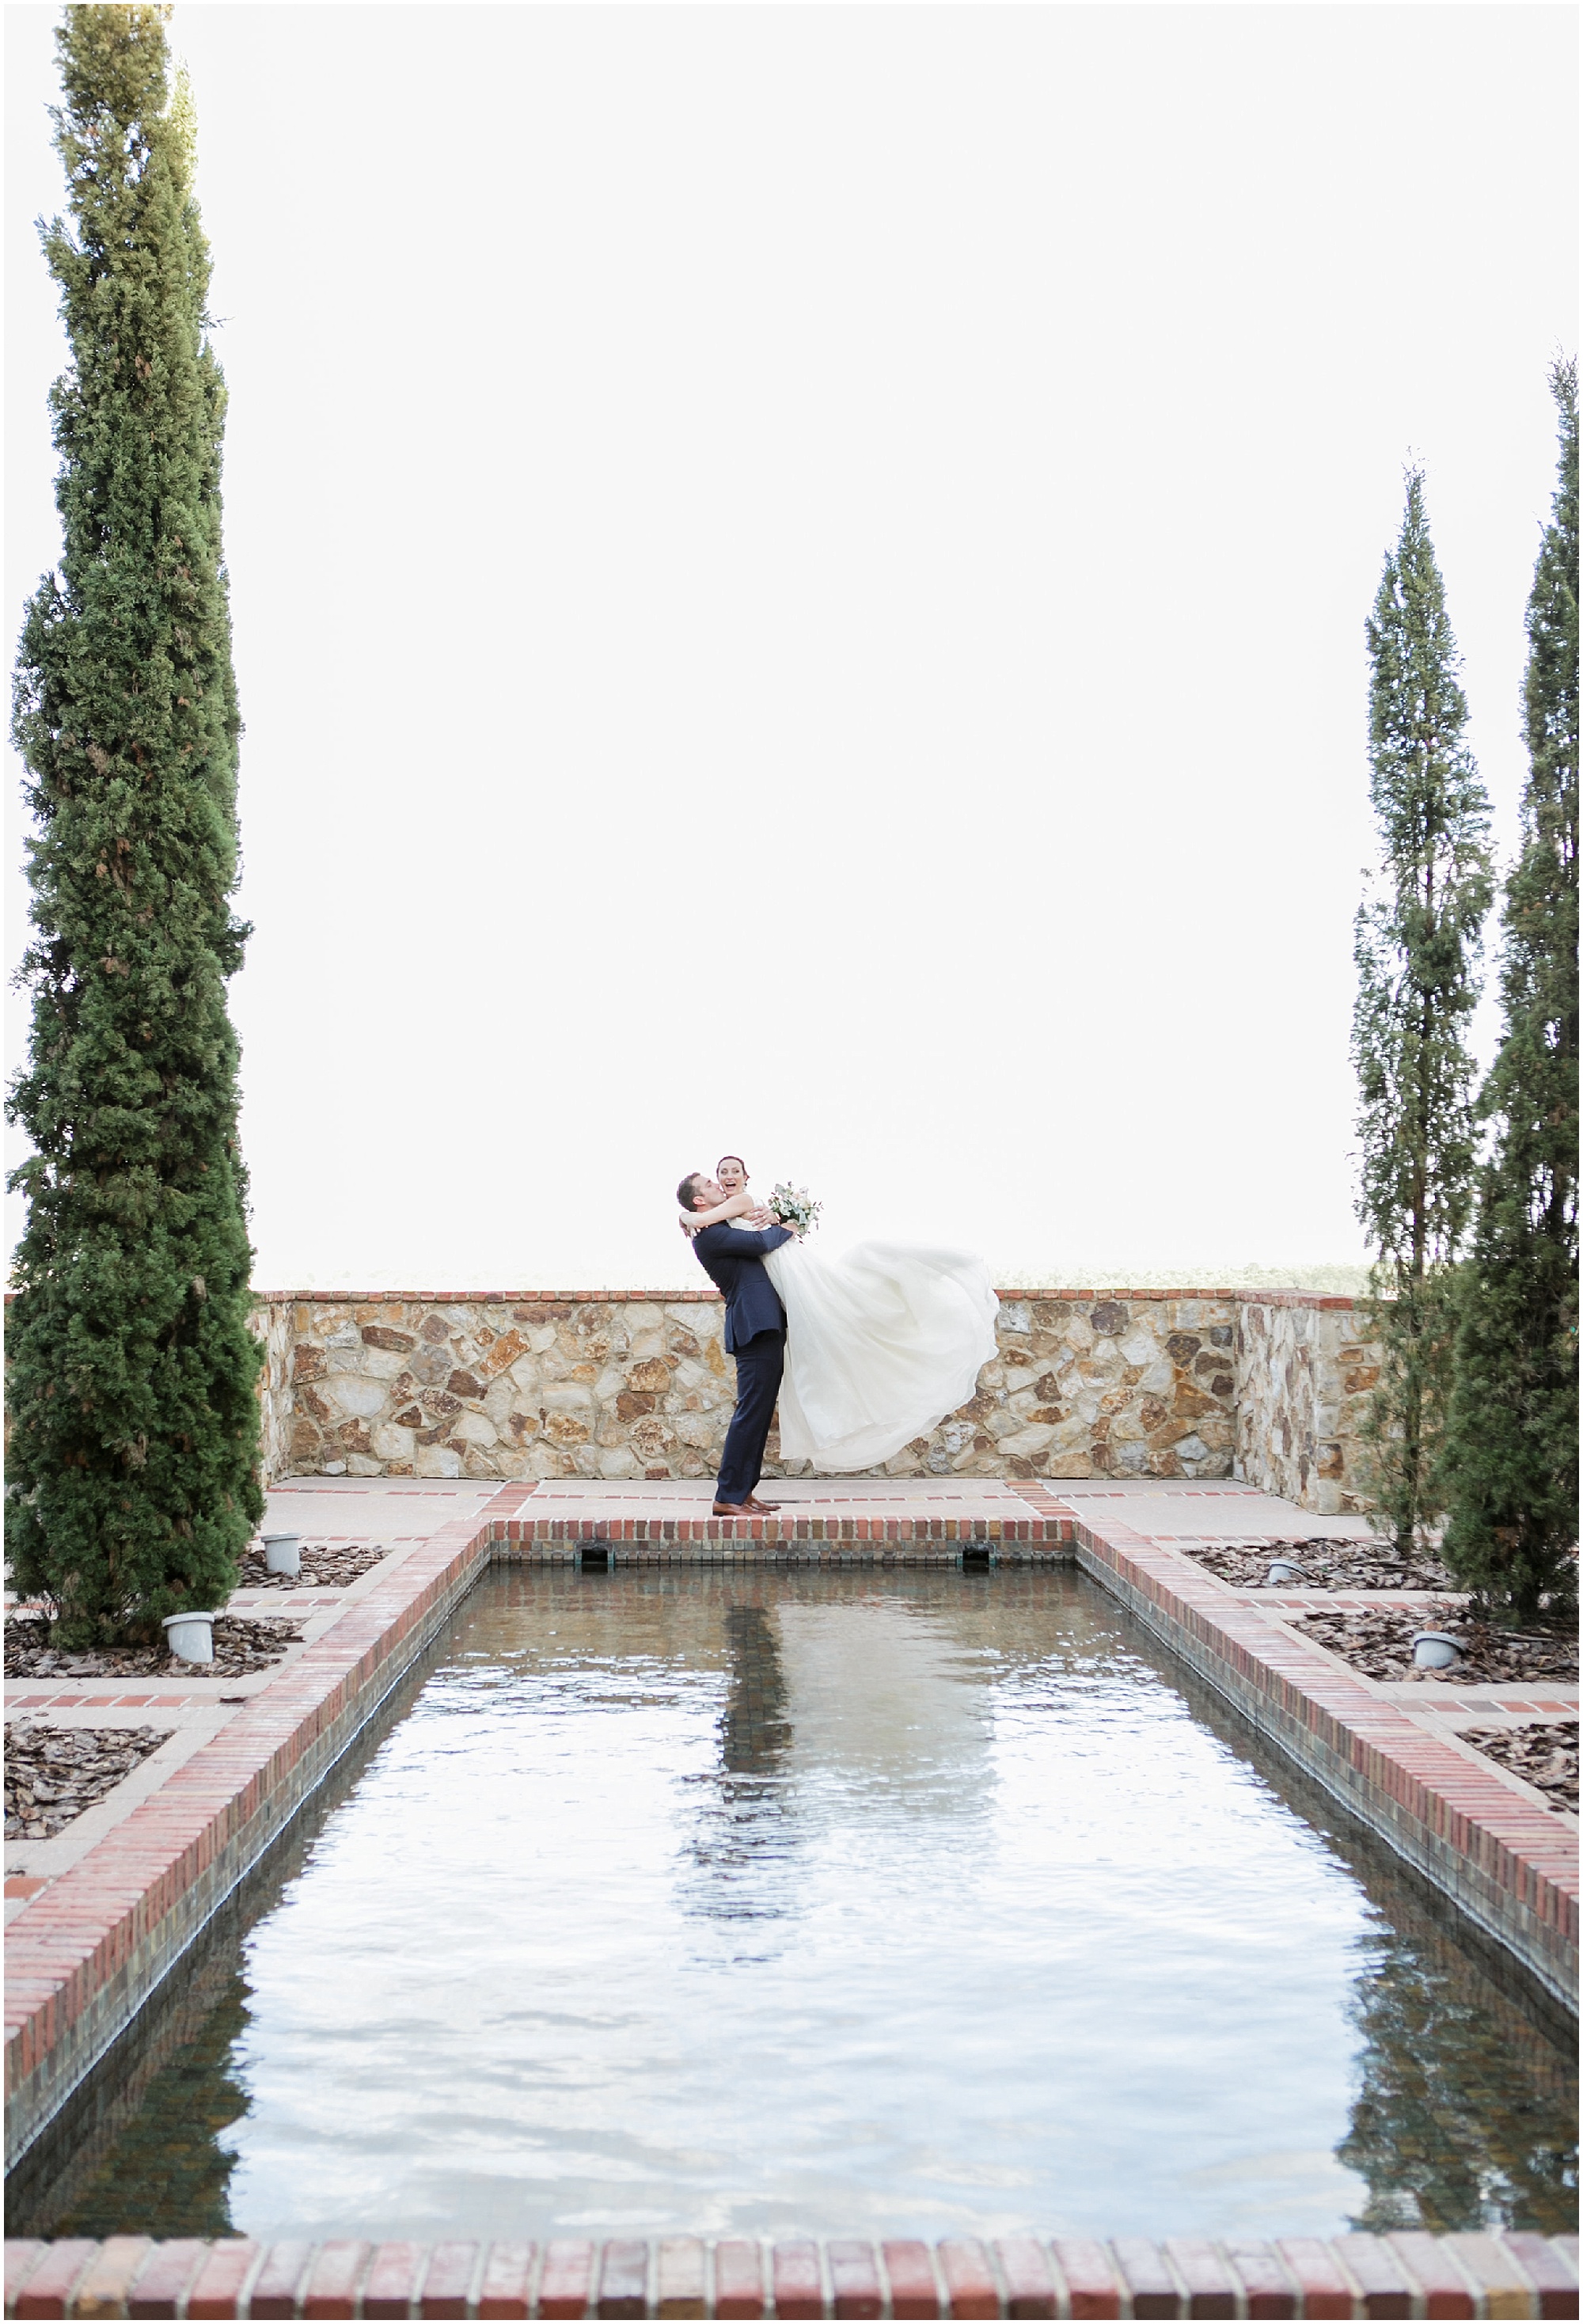 Groom lifting laughing bride at Bella Collina pond